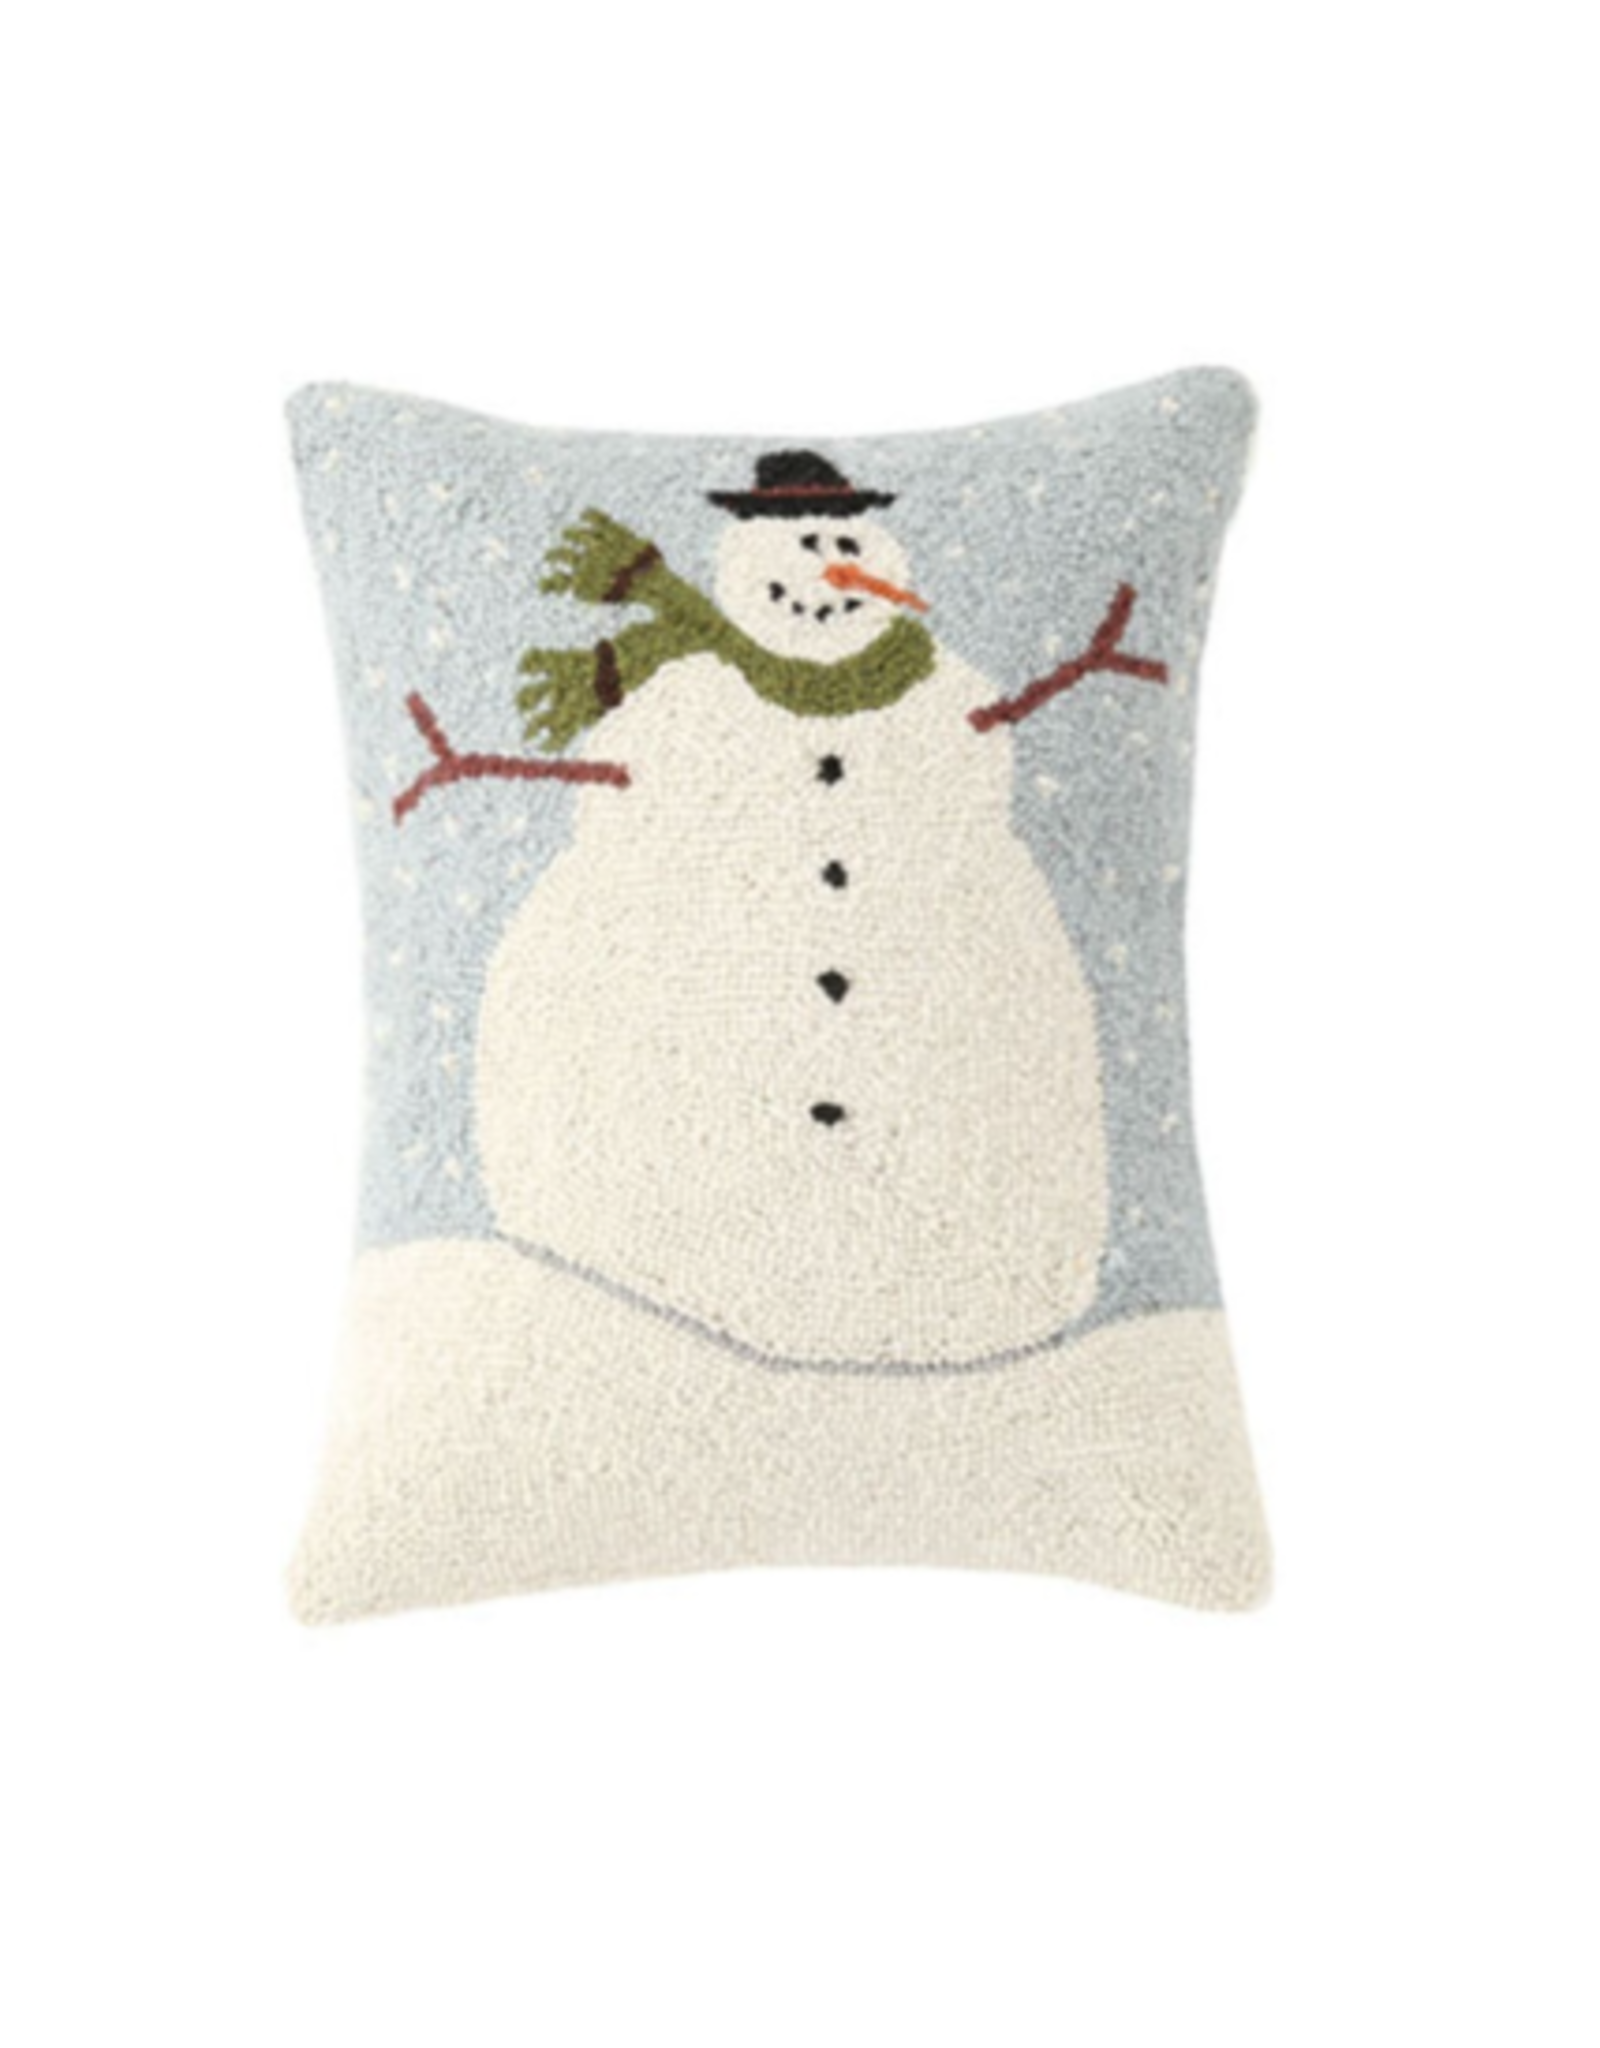 Hooked Pillow, Oversized Snowman 14x18